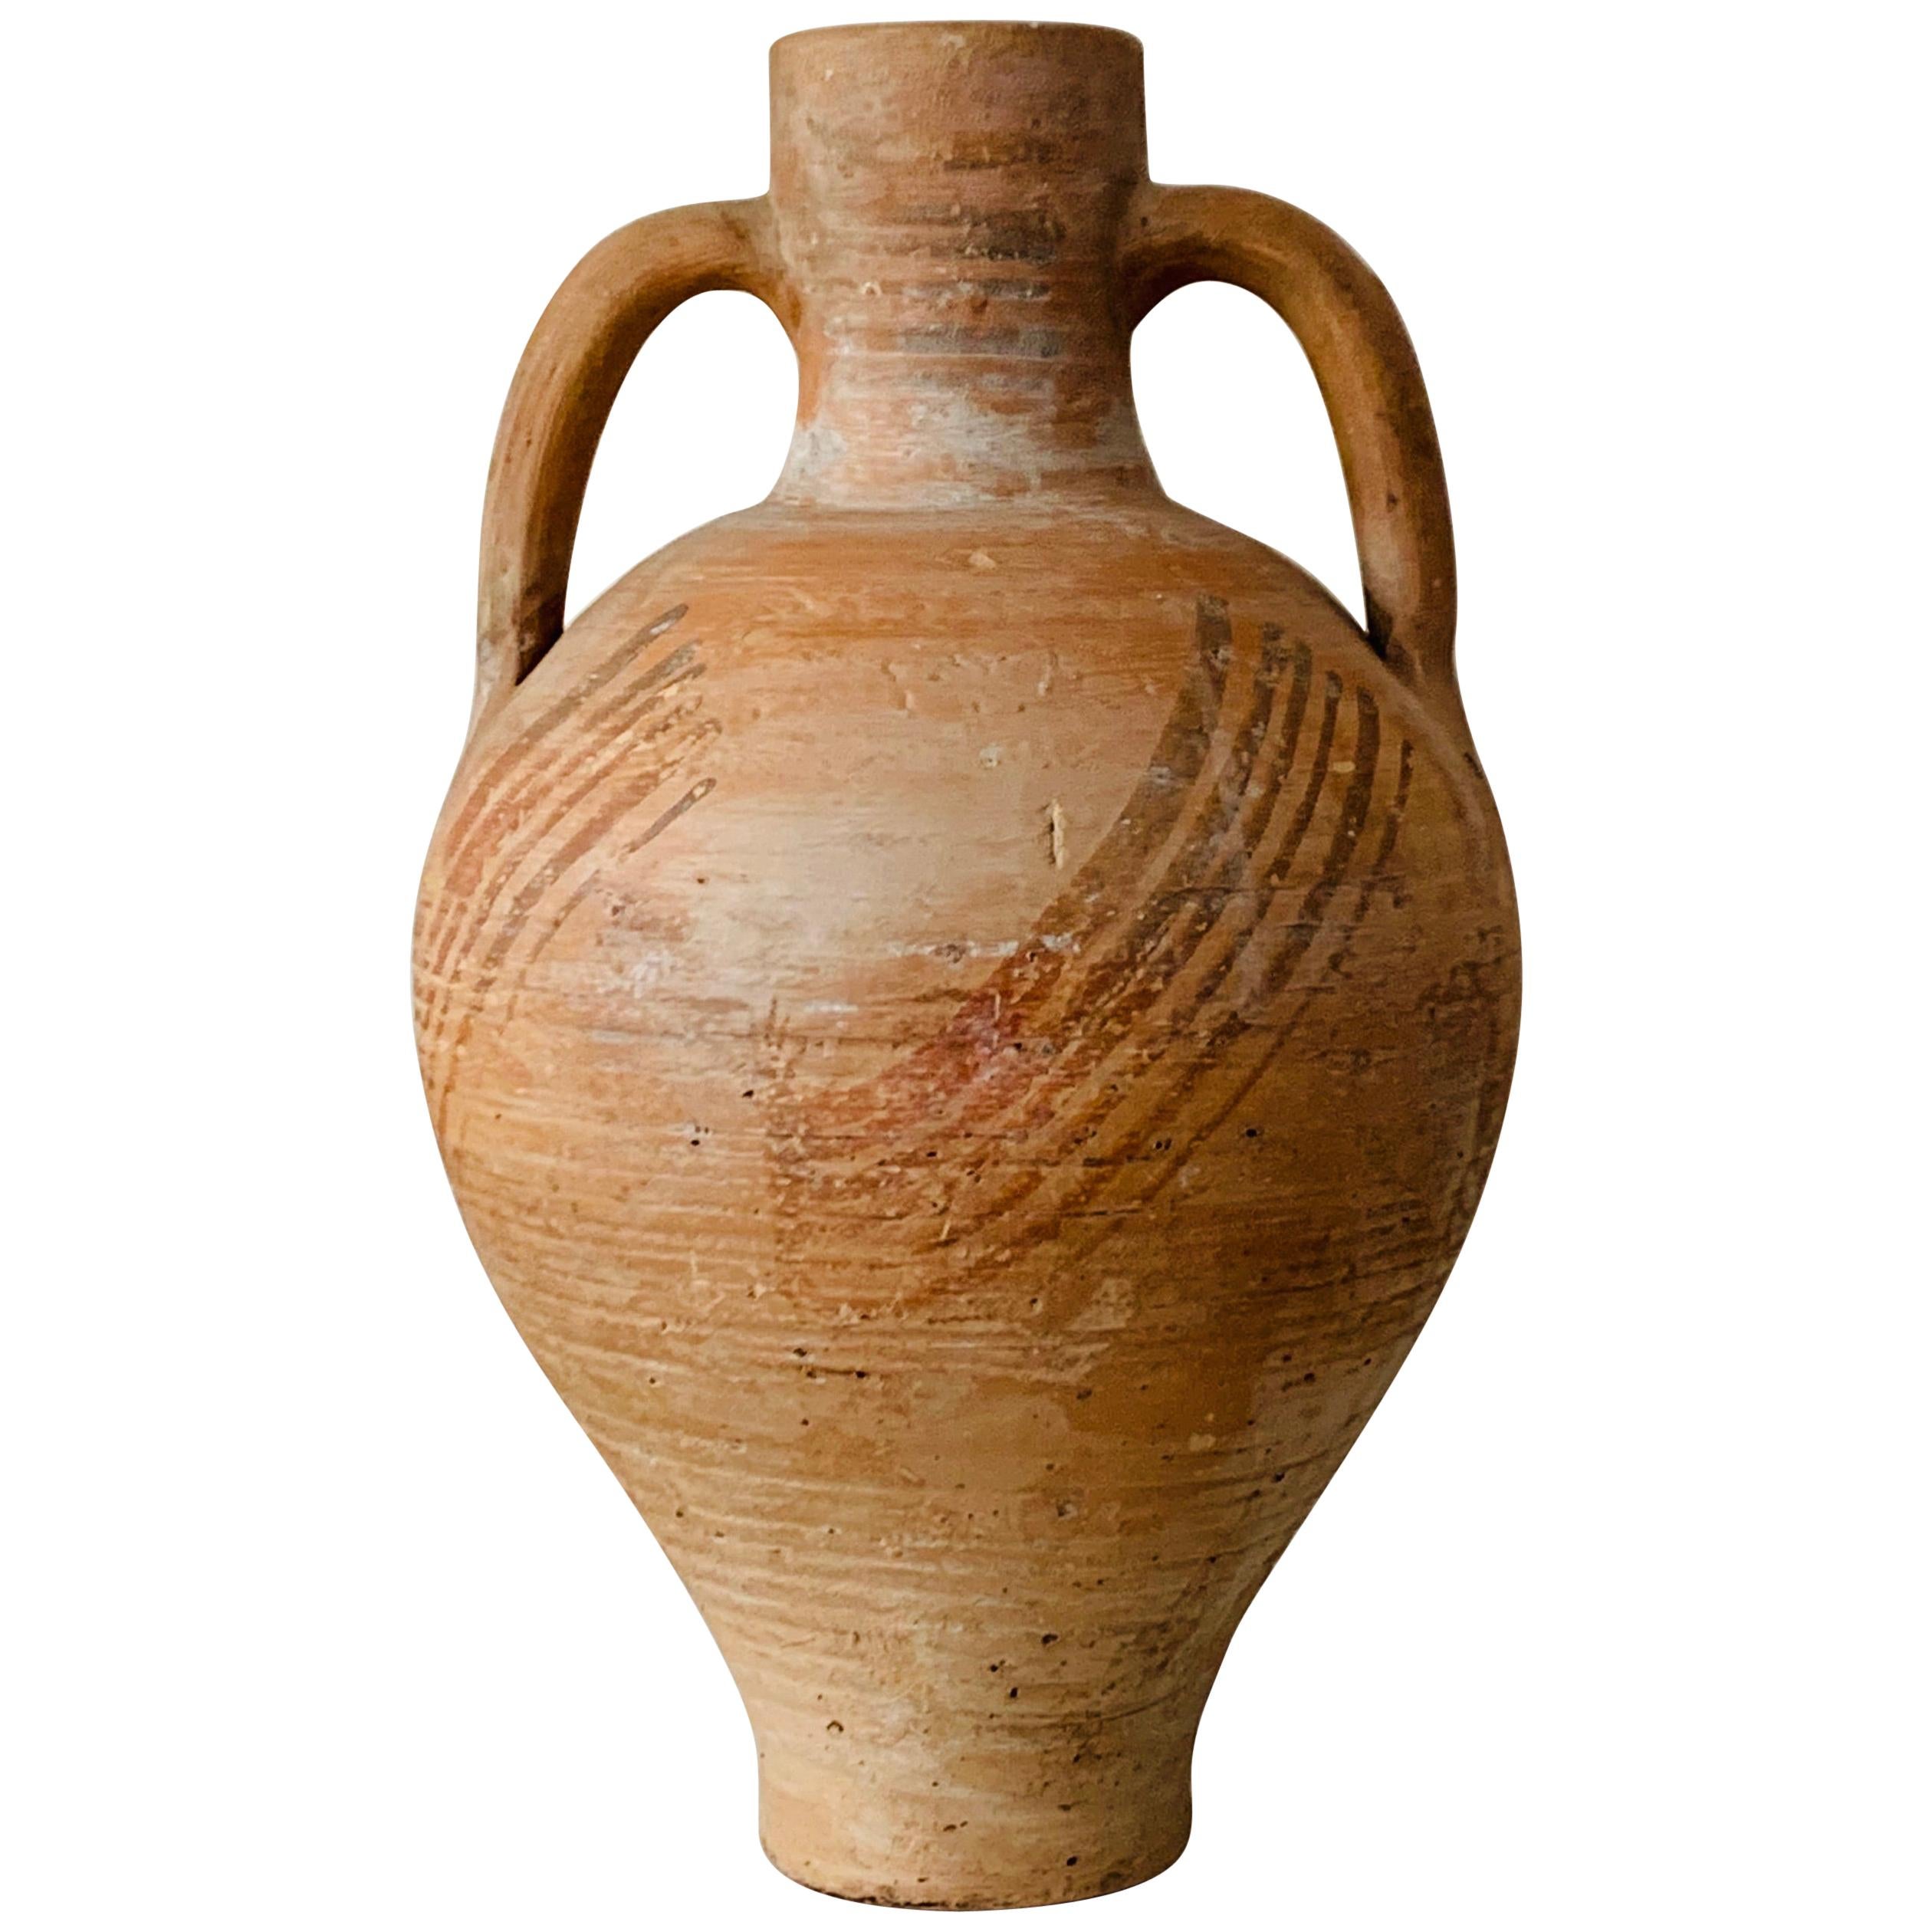 vase en terre cuite Picher "Cantaro" de Calanda:: Espagne:: 19e siècle